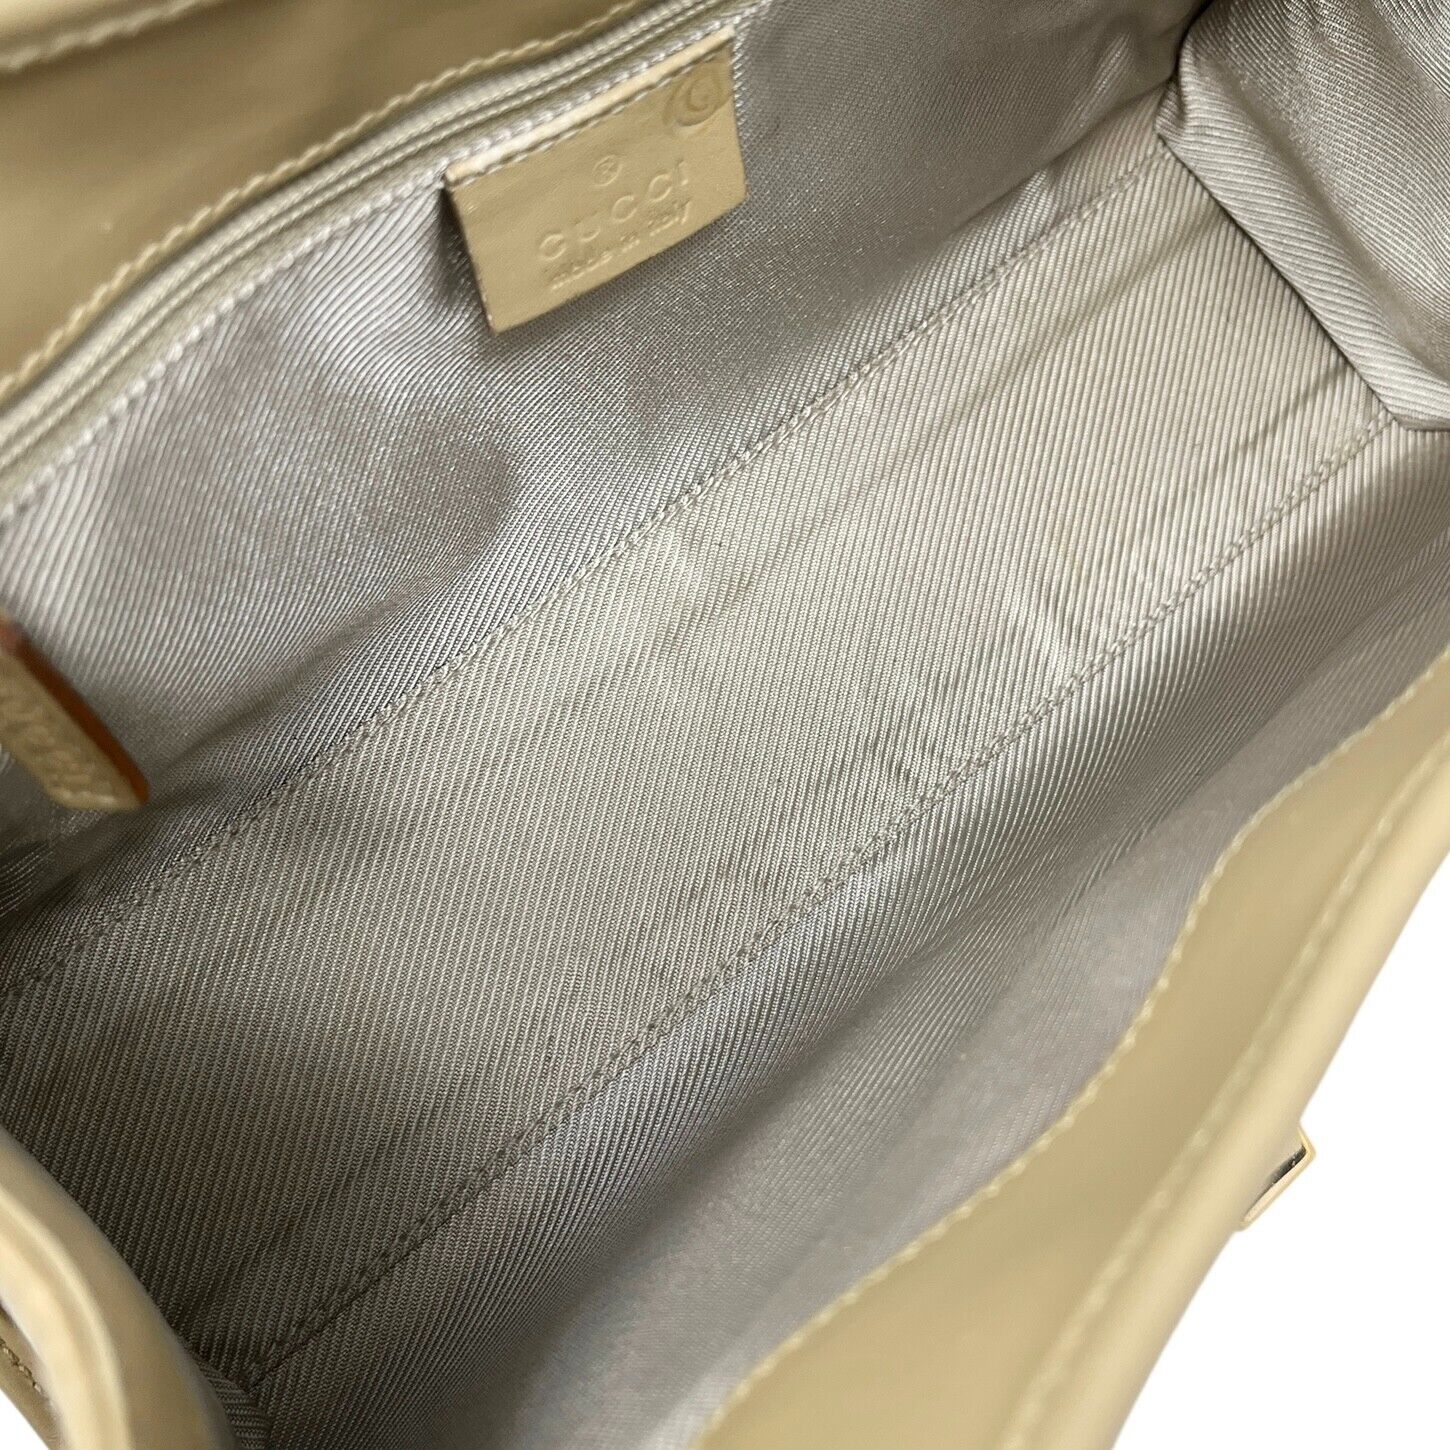 GUCCI Vintage Micro GG Monogram Jackie Mini Bag Beige Gold Leather Rank AB